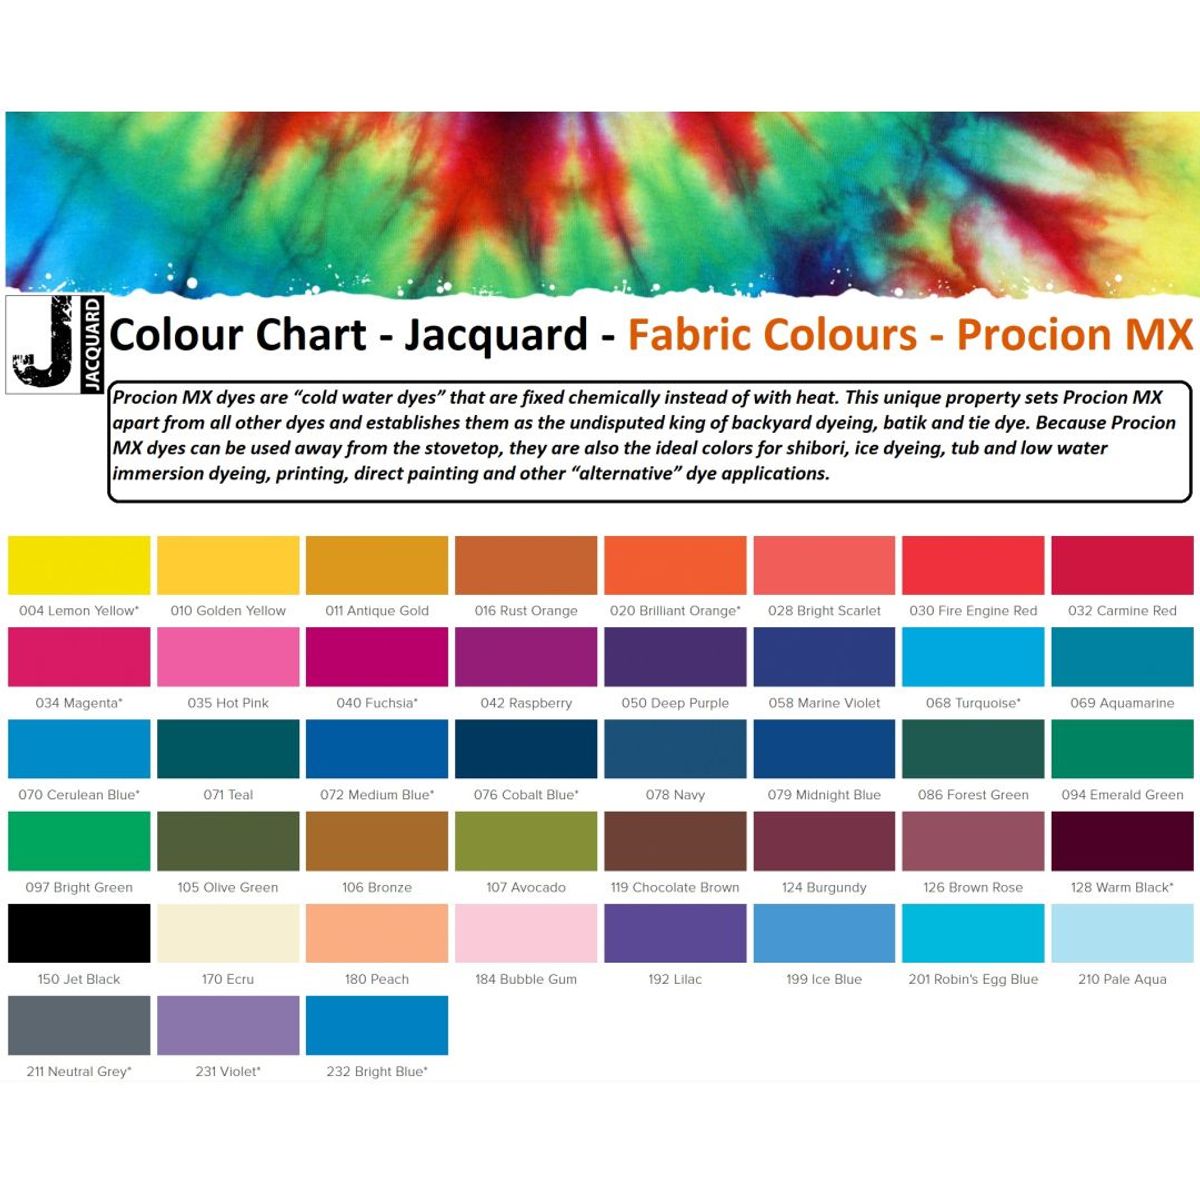 Jacquard - Procion MX Dye - Fabric Textile - Pale Aqua 210